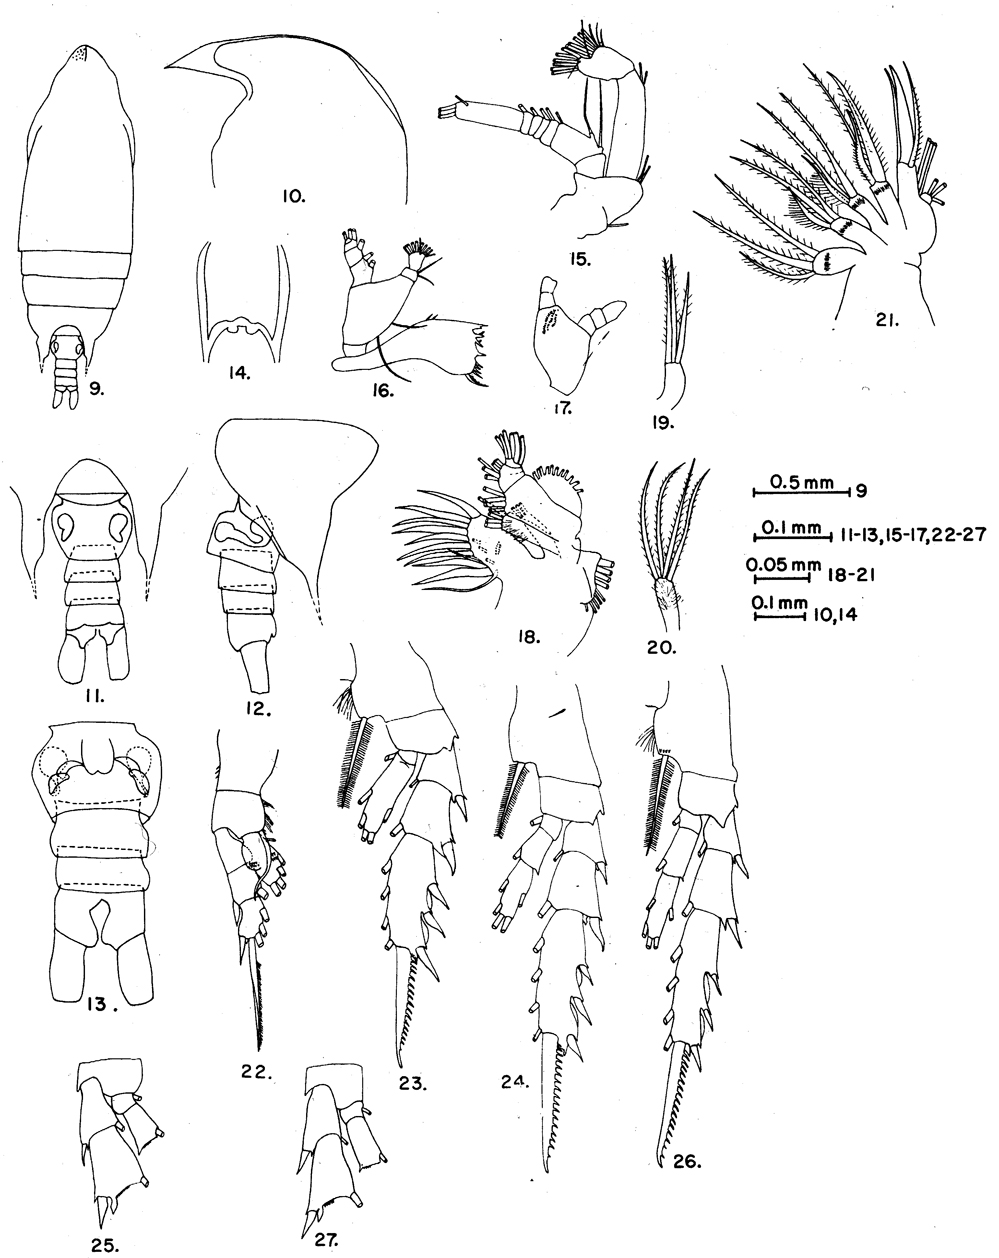 Species Aetideus giesbrechti - Plate 23 of morphological figures